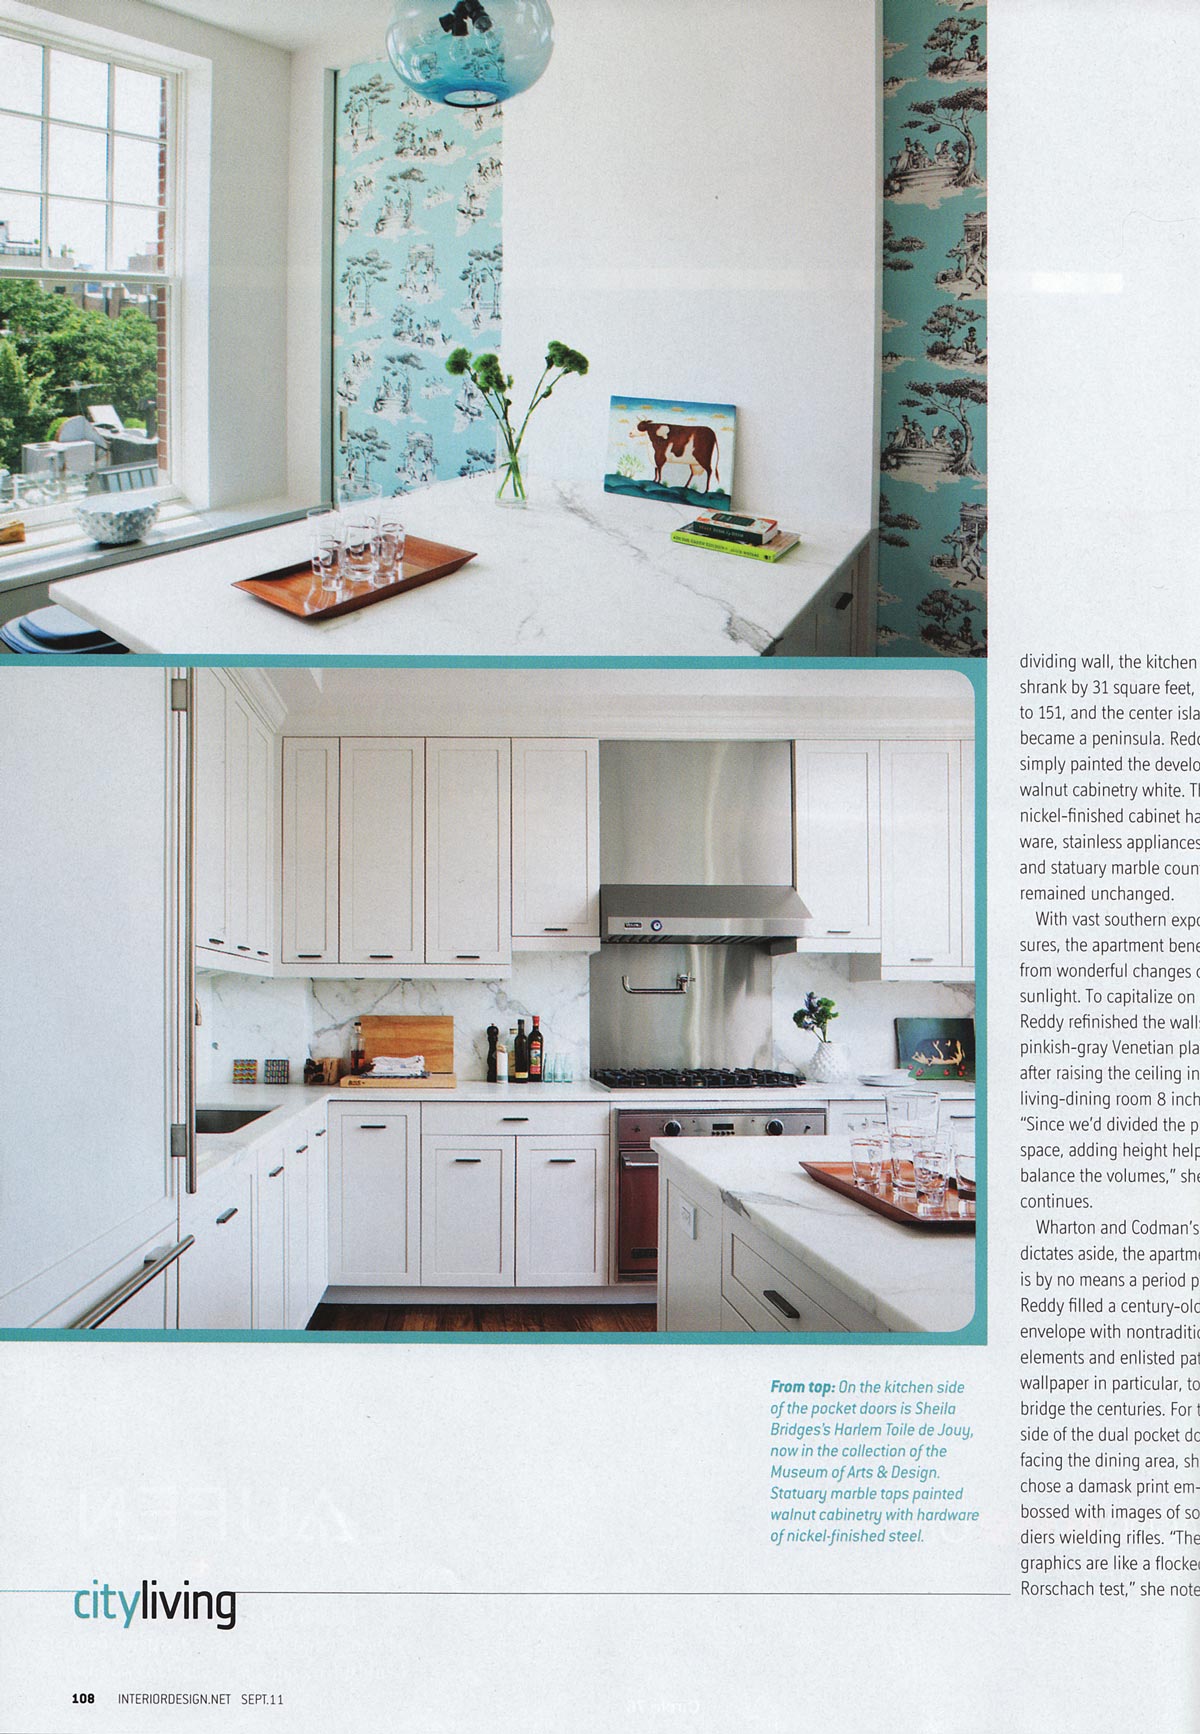 Terra Modern Pendant Light in an Interior Design Magazine feature